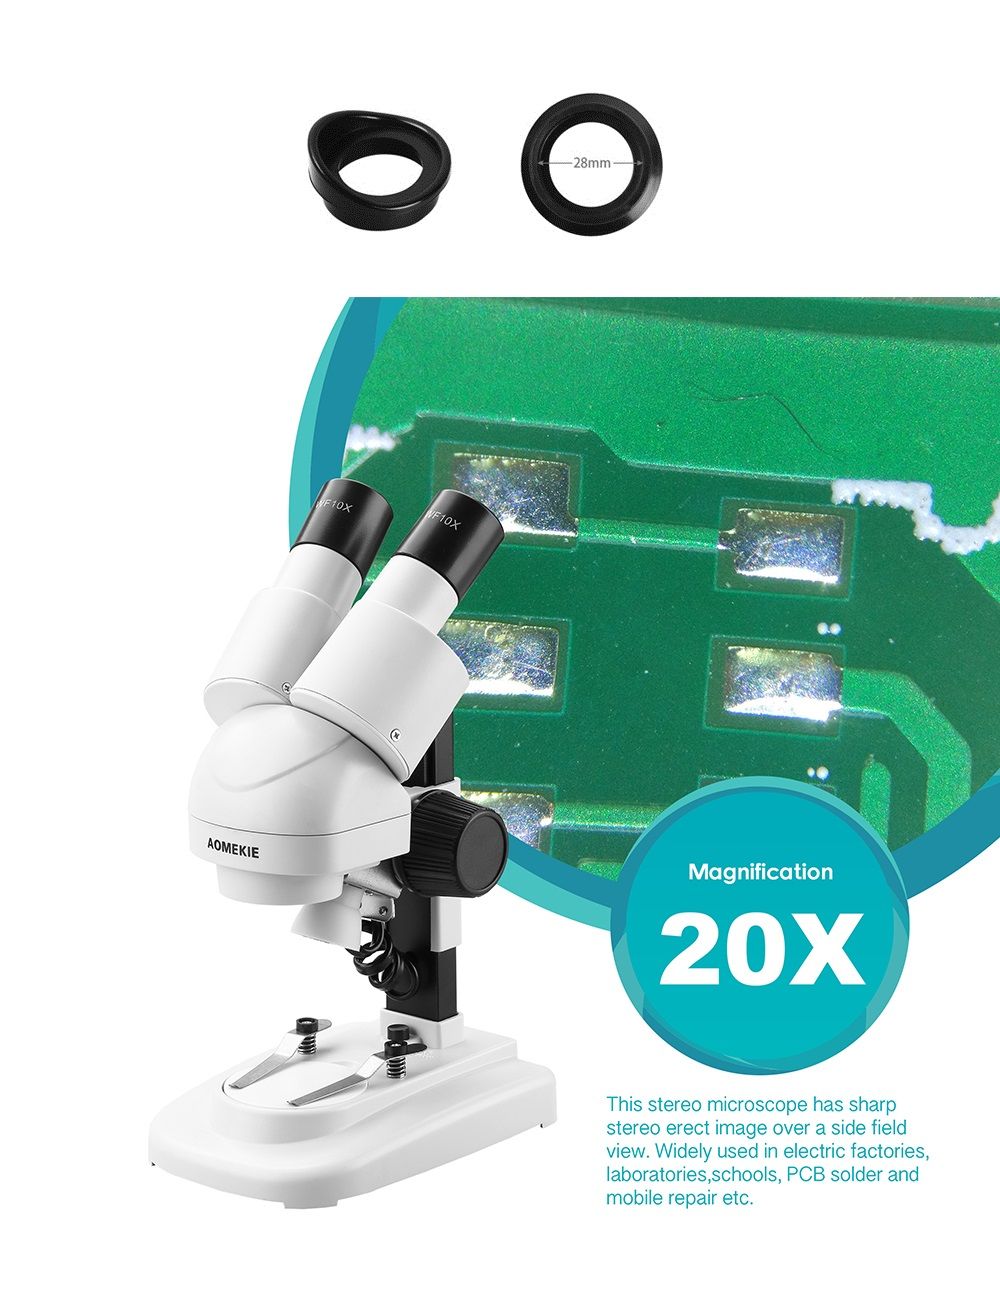 AOMEKIE-20X-Binocular-Stereo-Microscope-Top-LED-HD-Image-PCB-Solder-Phone-Repair-Specimen-Mineral-Wa-1669602